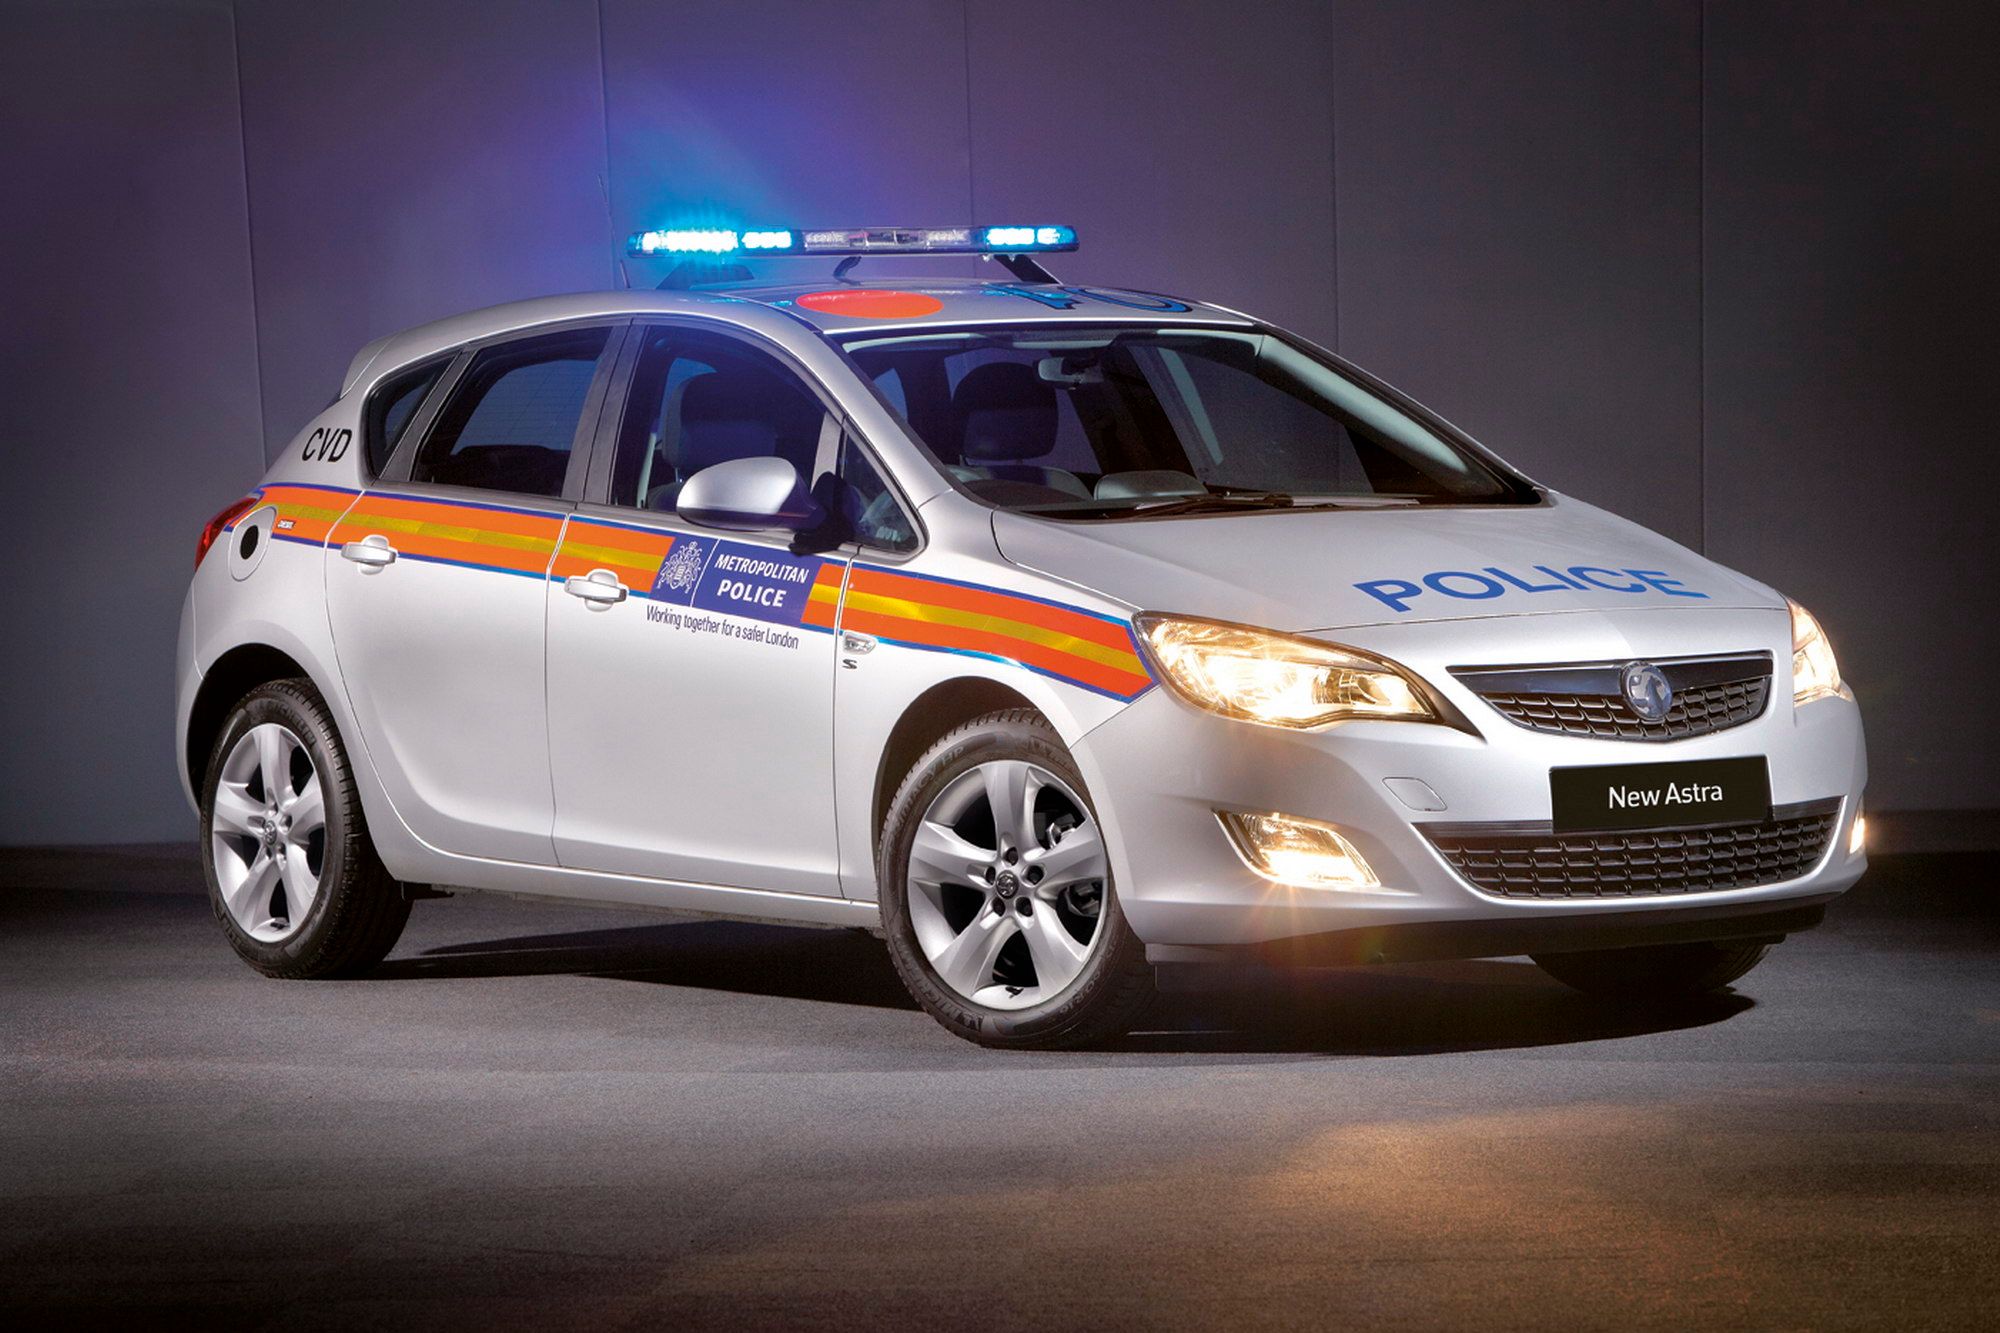 2010 Vauxhall Astra Police Car